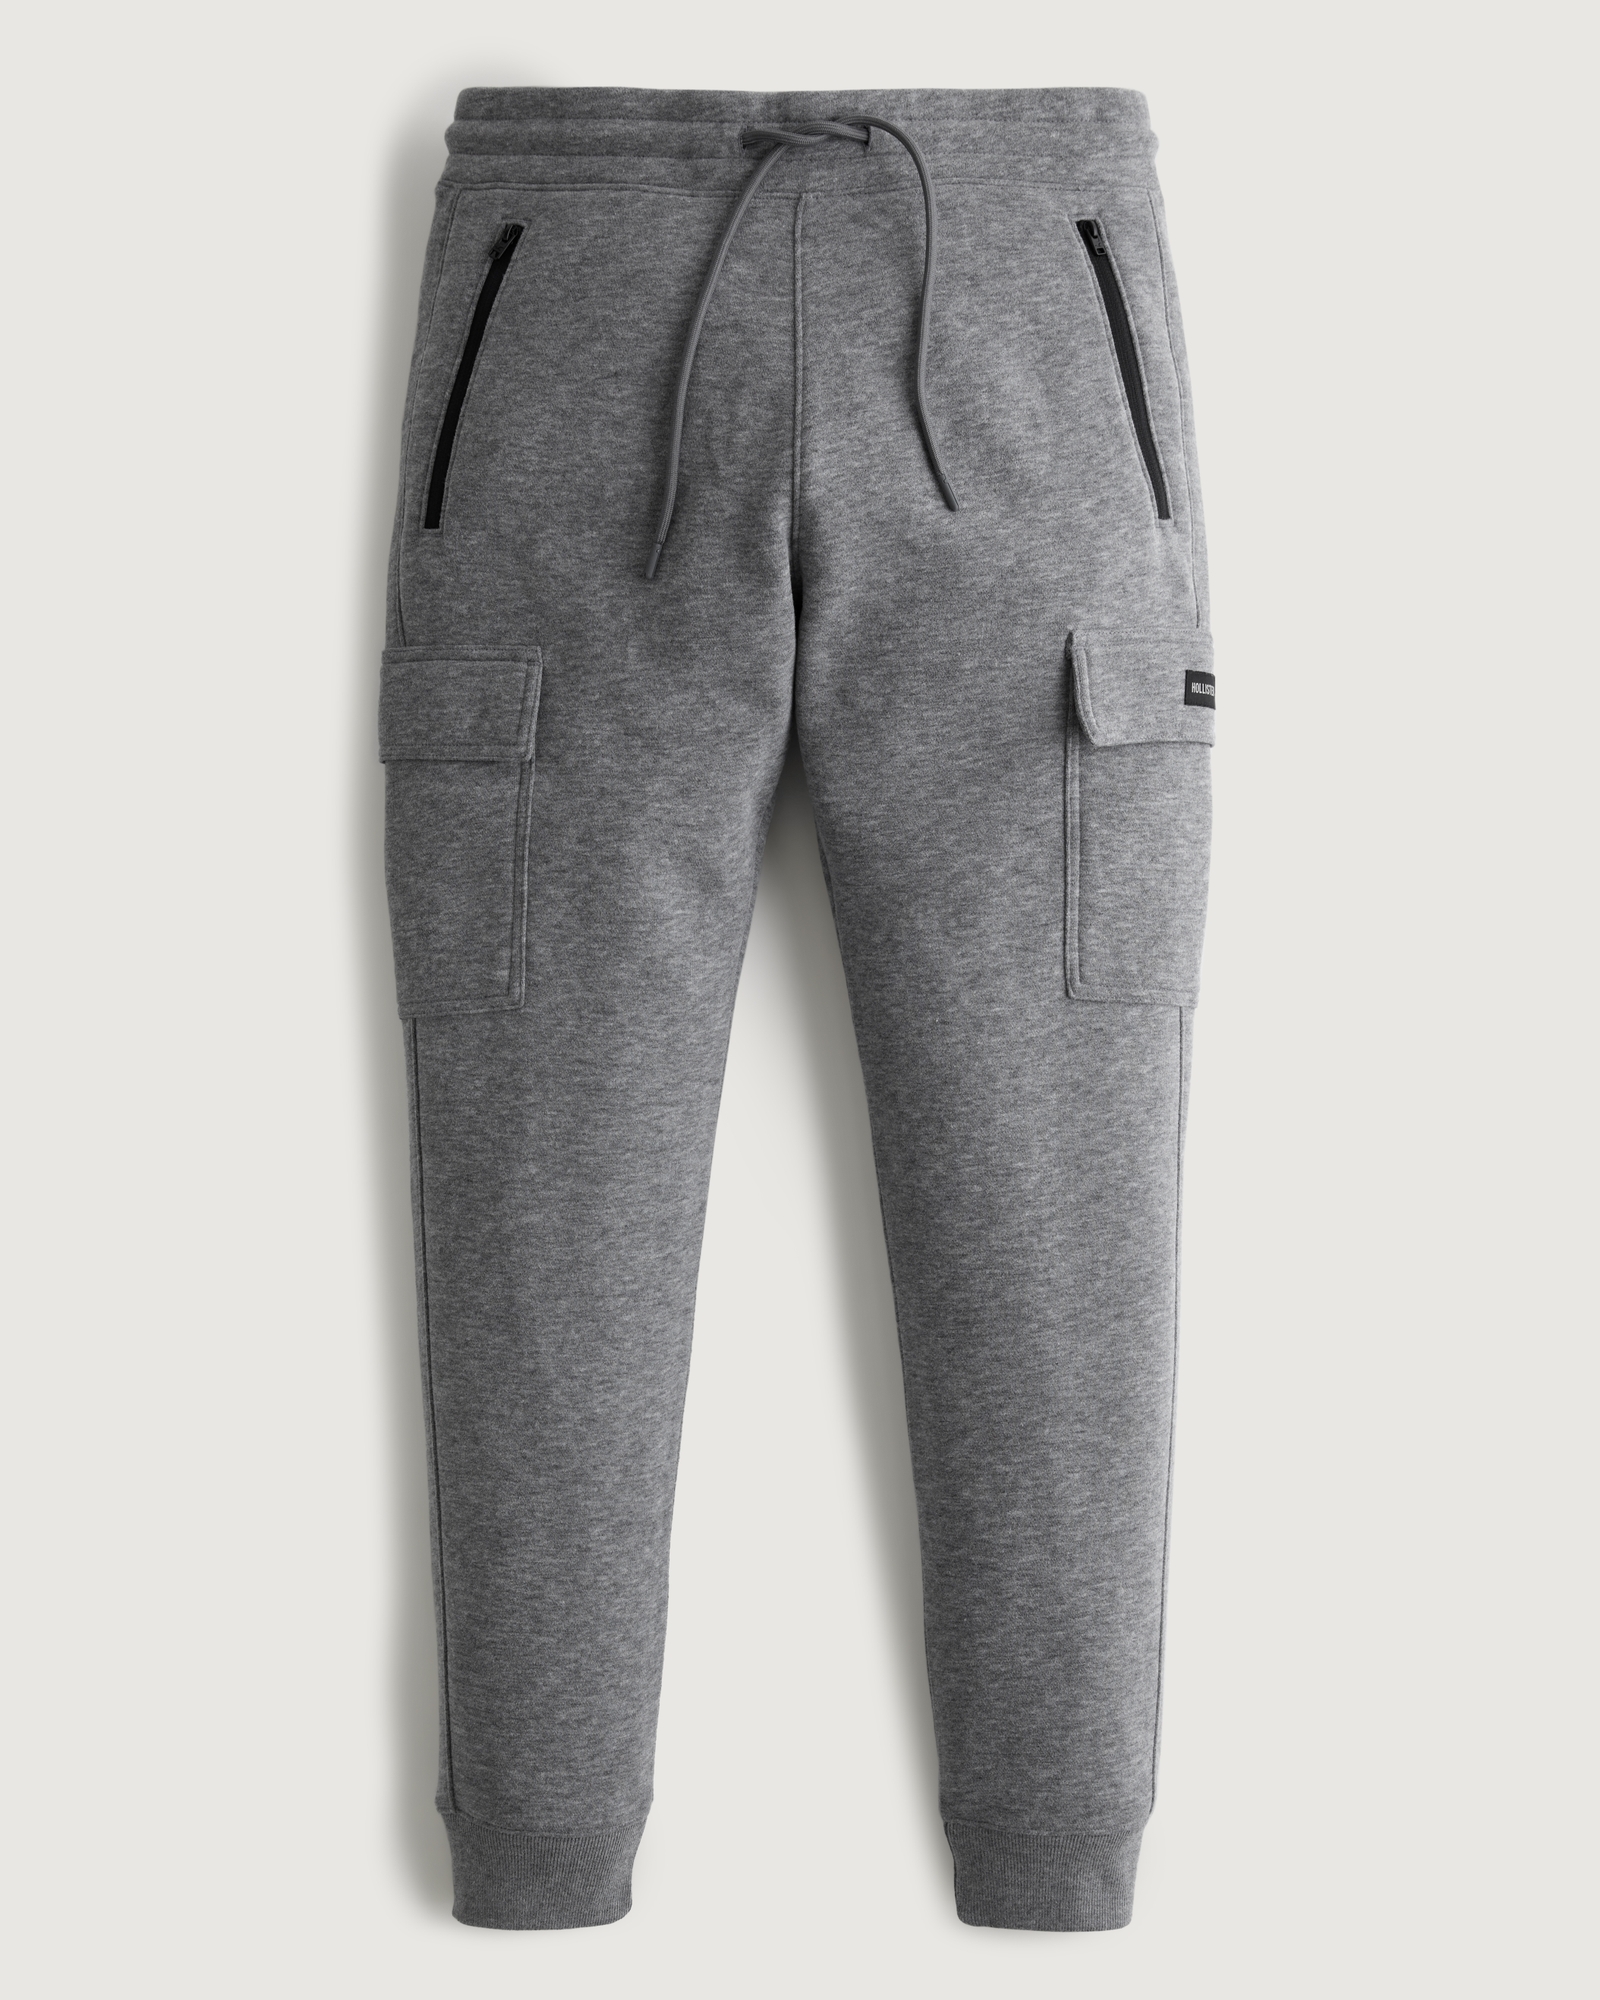 Hollister Gray Sweatpants Size M - 52% off